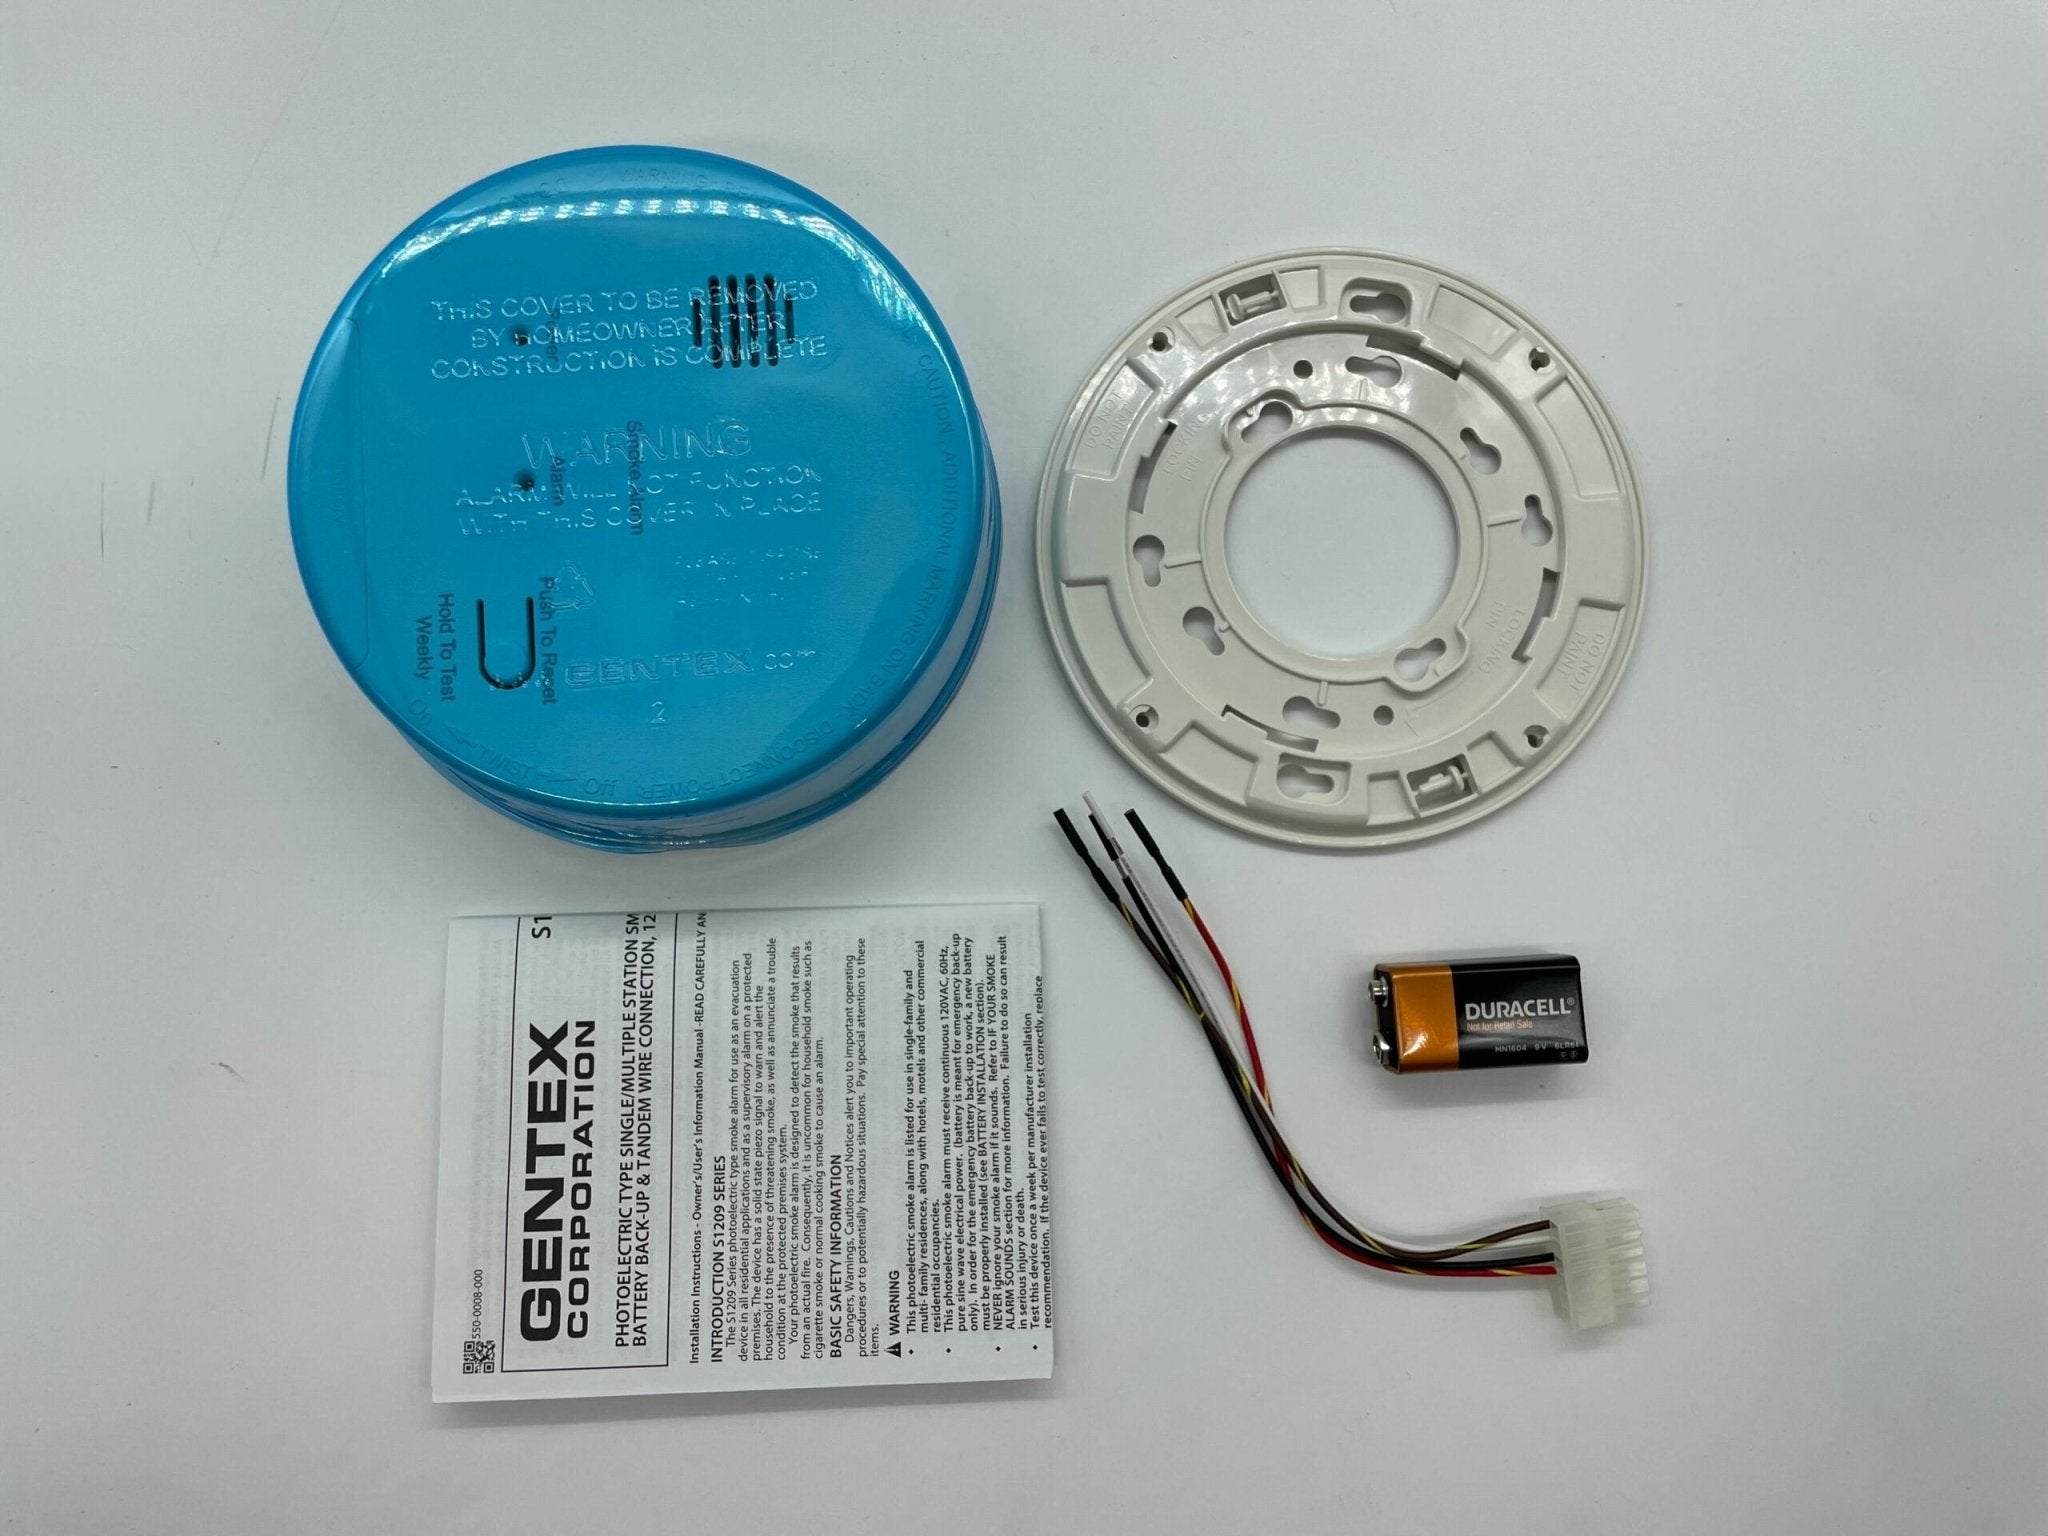 Gentex S1209 - The Fire Alarm Supplier